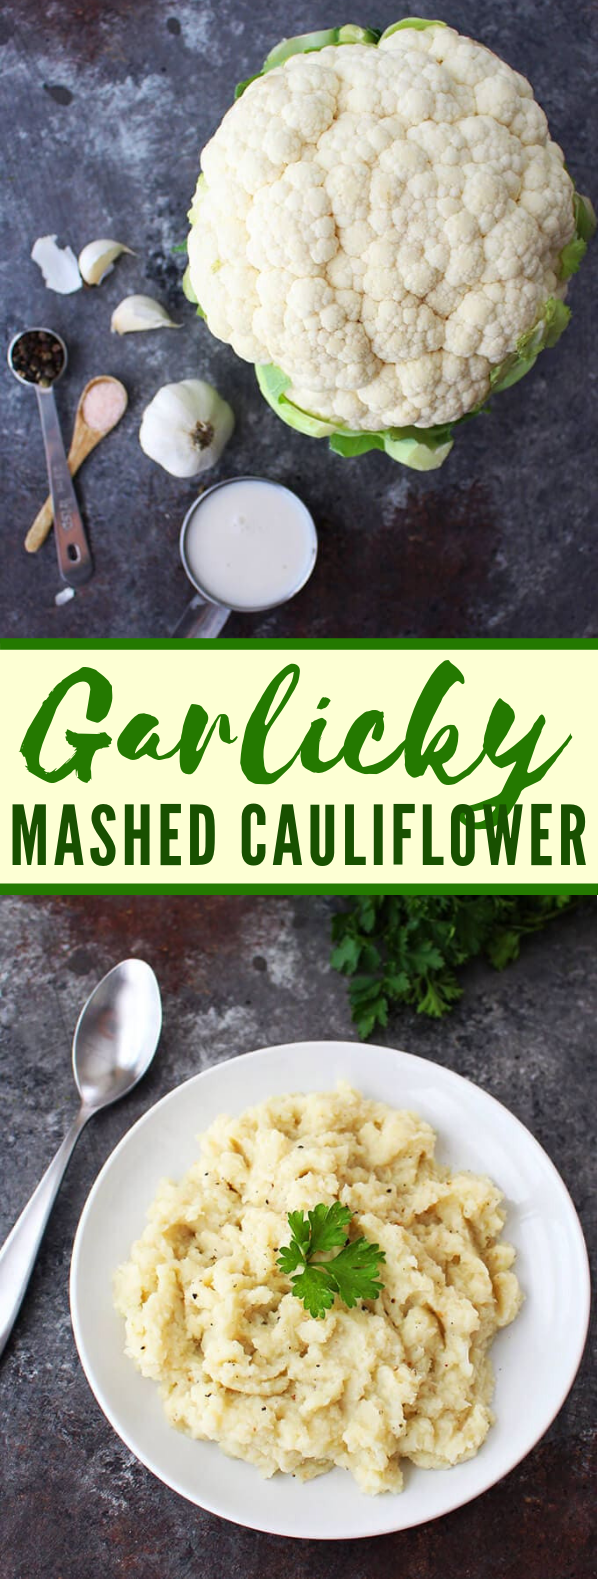 GARLICKY MASHED CAULIFLOWER #vegetarian #garlic